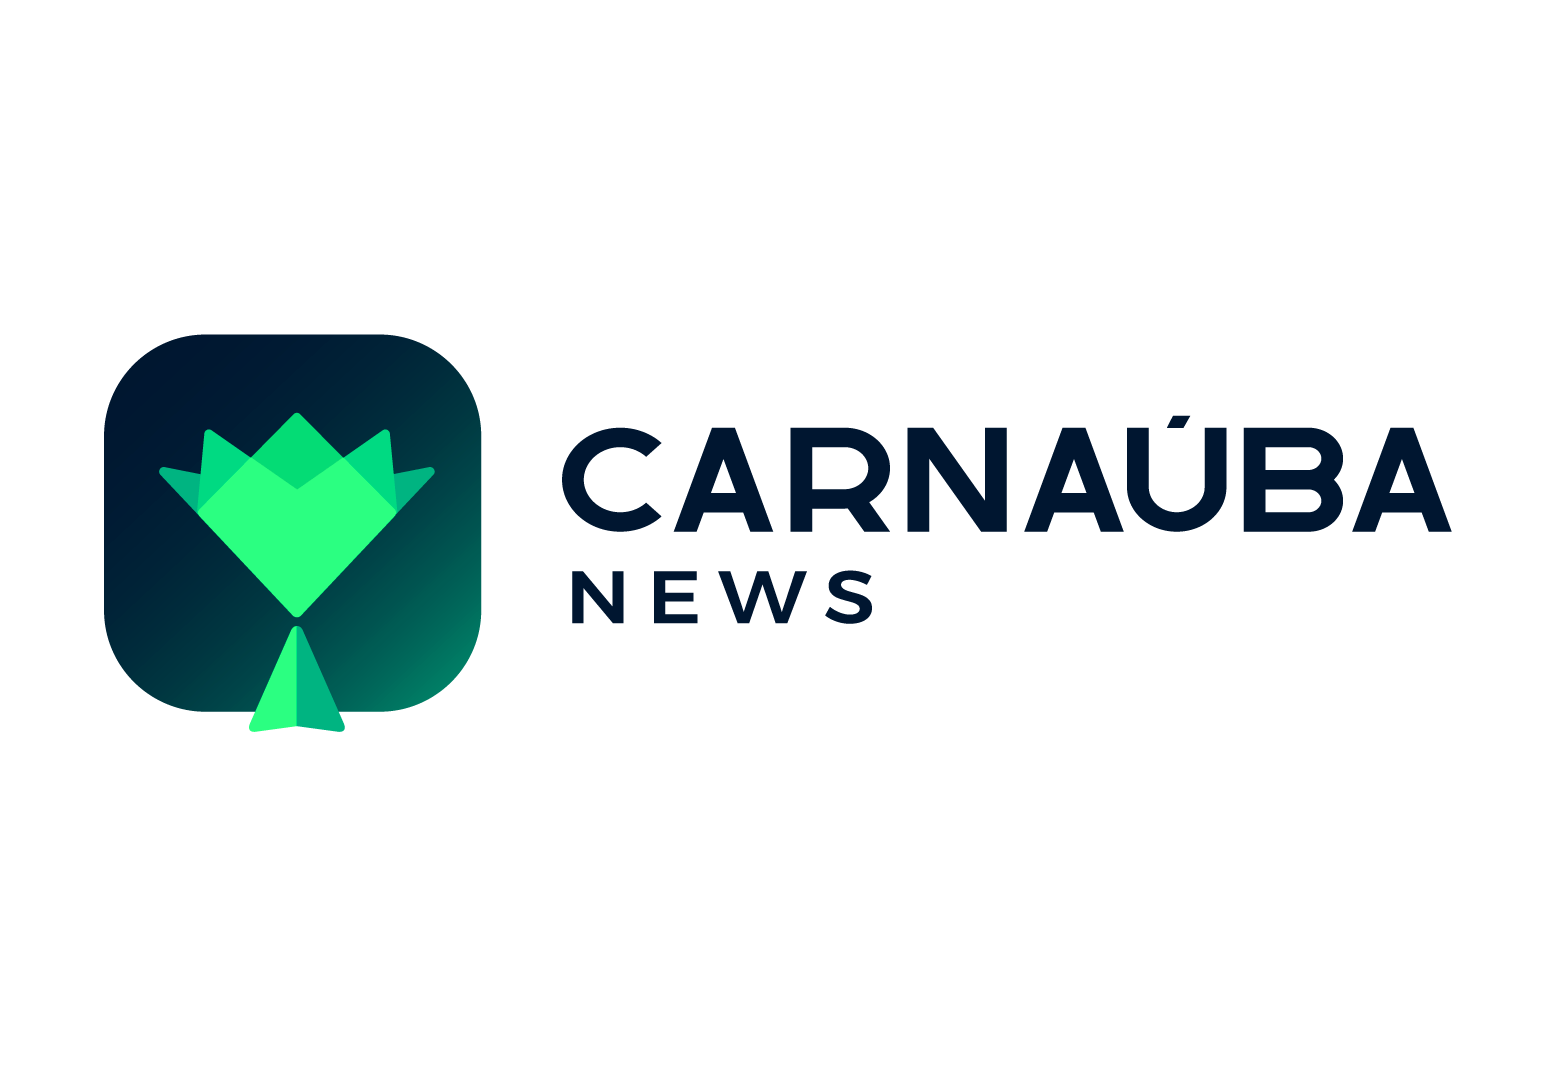 Carnauba News